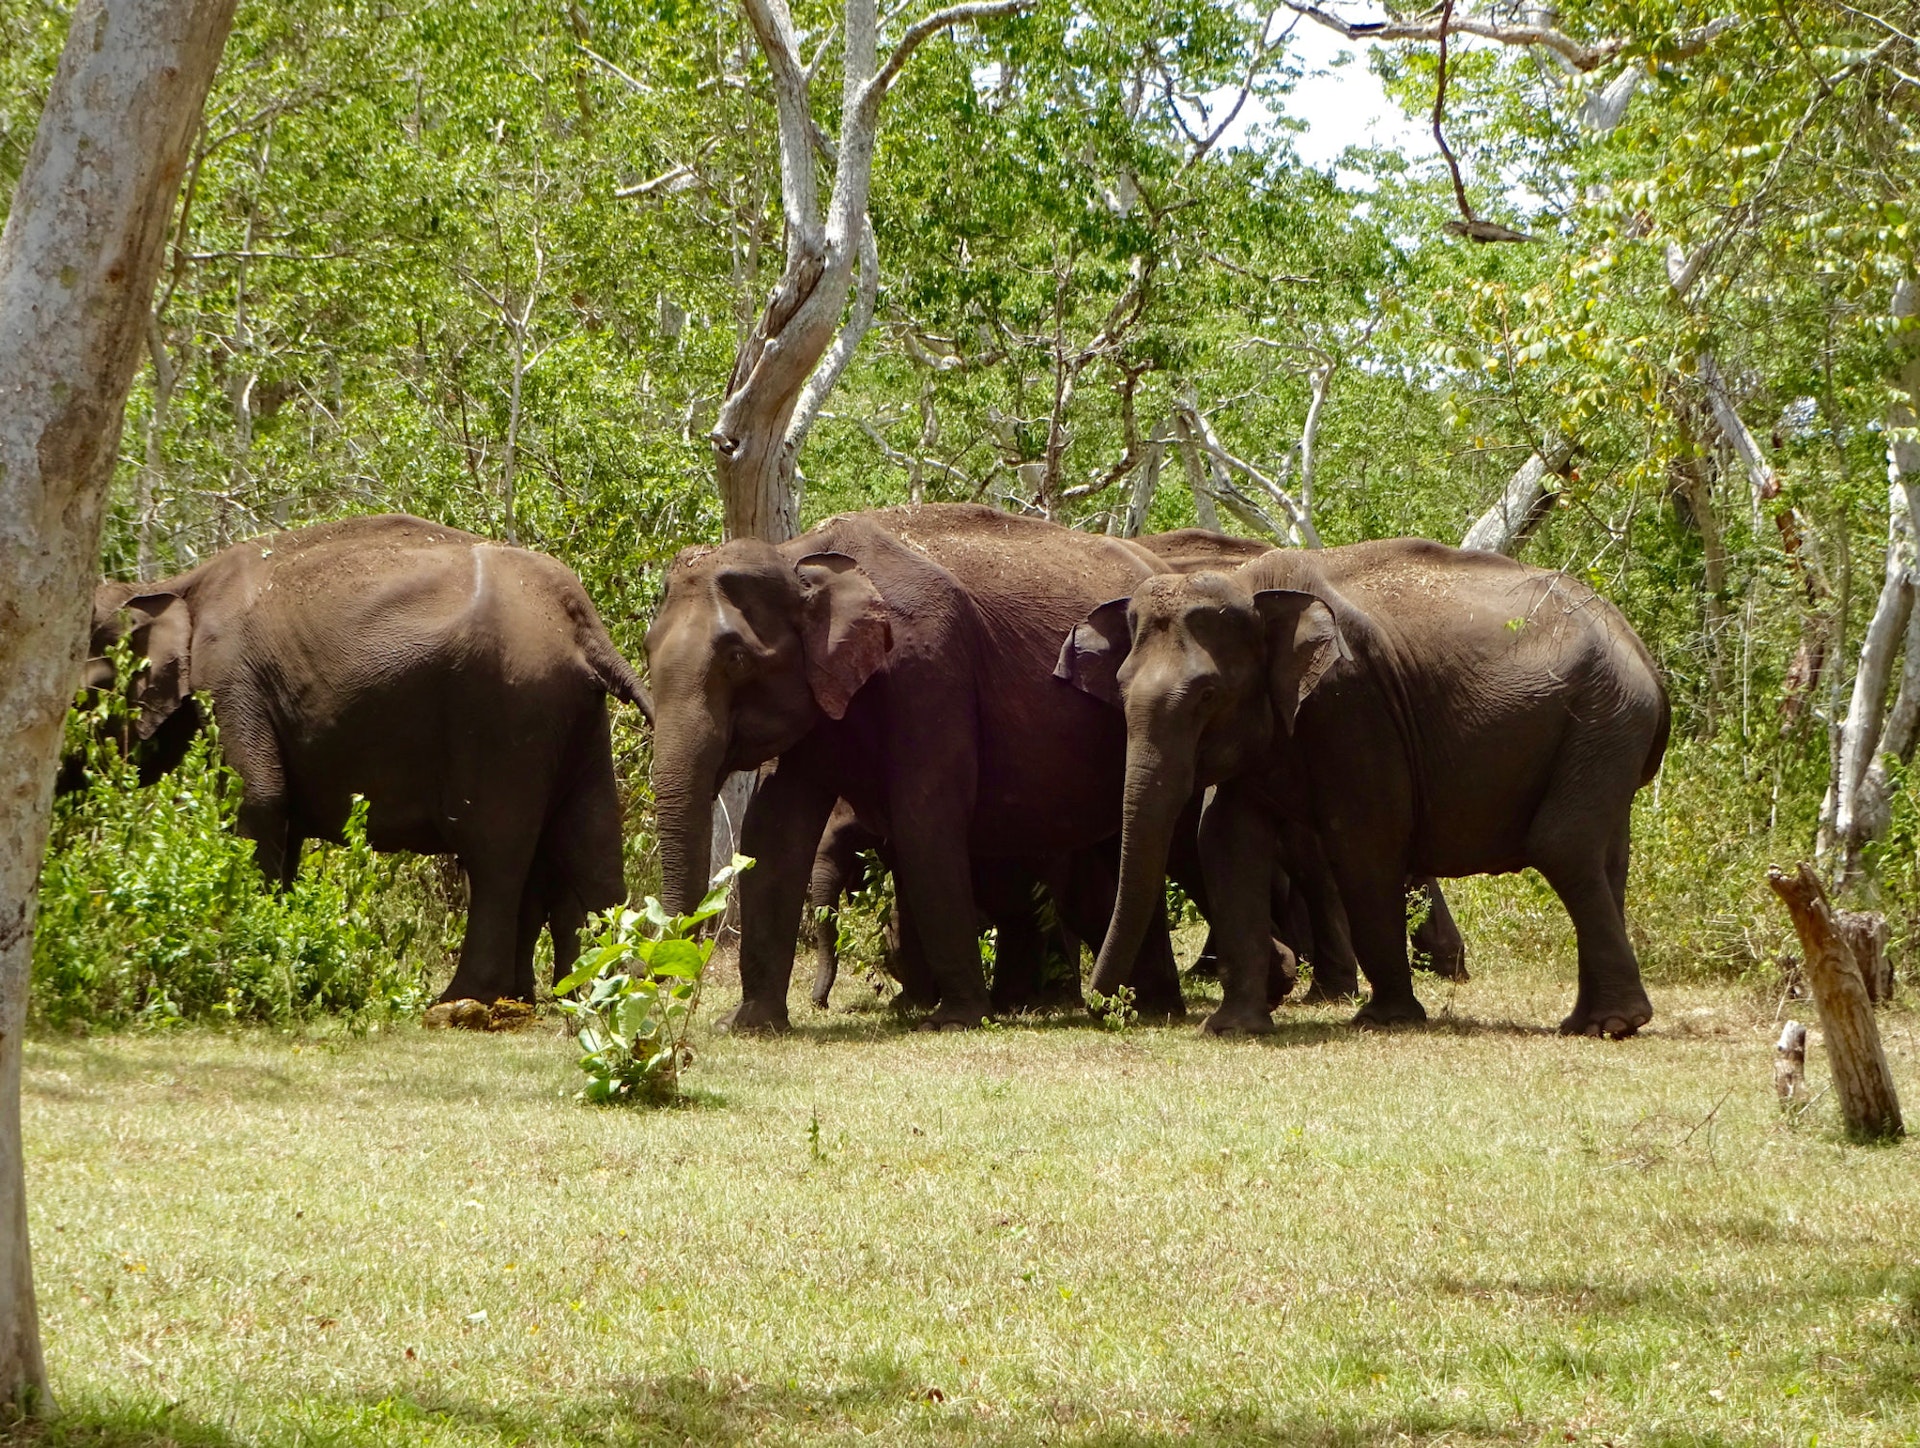 Elephants roaming in Mudumalai tiger reserve